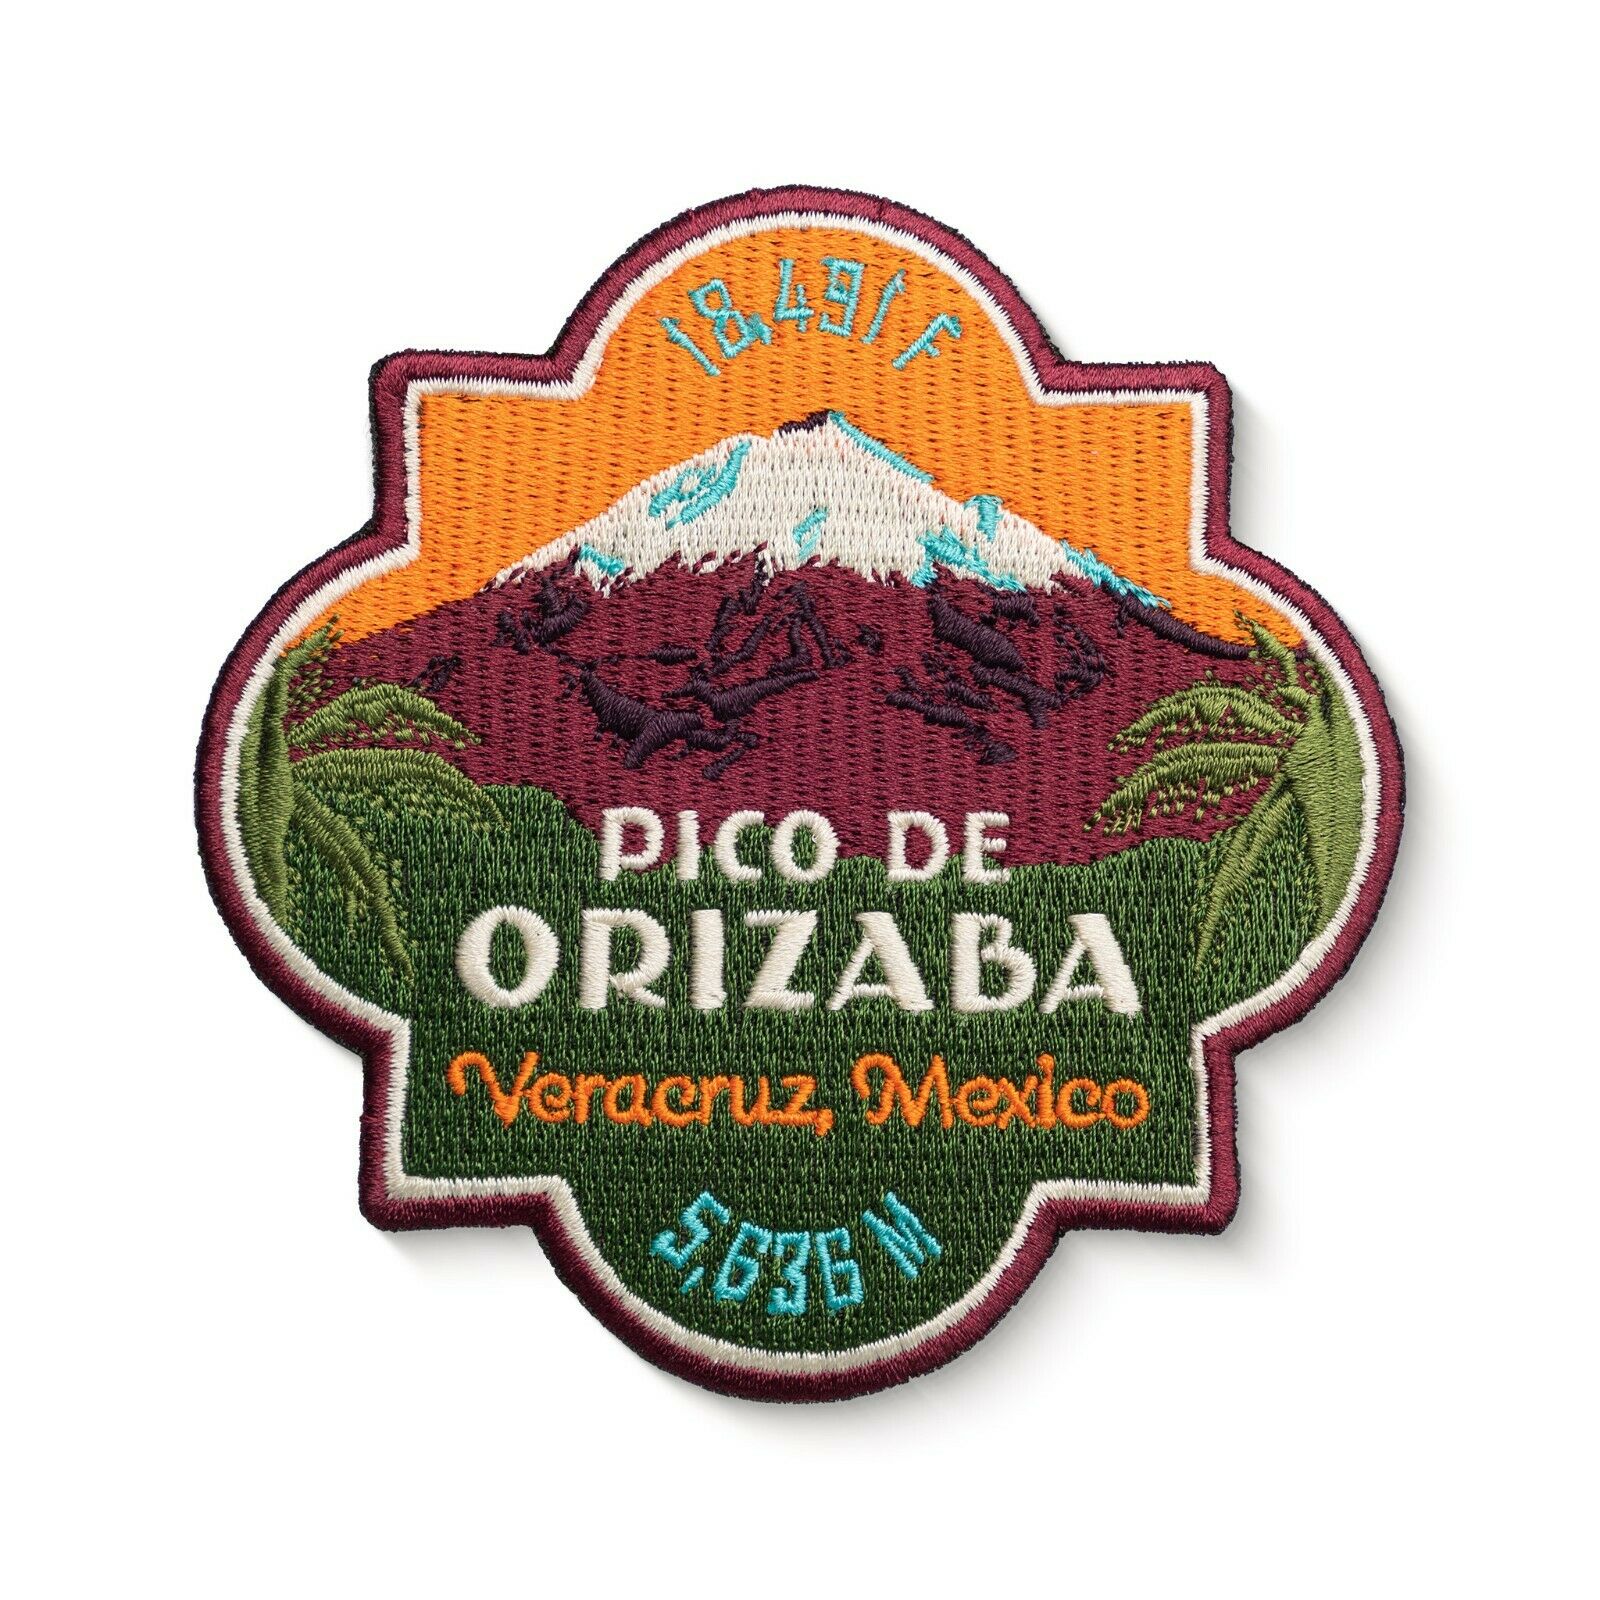 Pico de Orizaba Mexico Embroidered Iron-on Patch